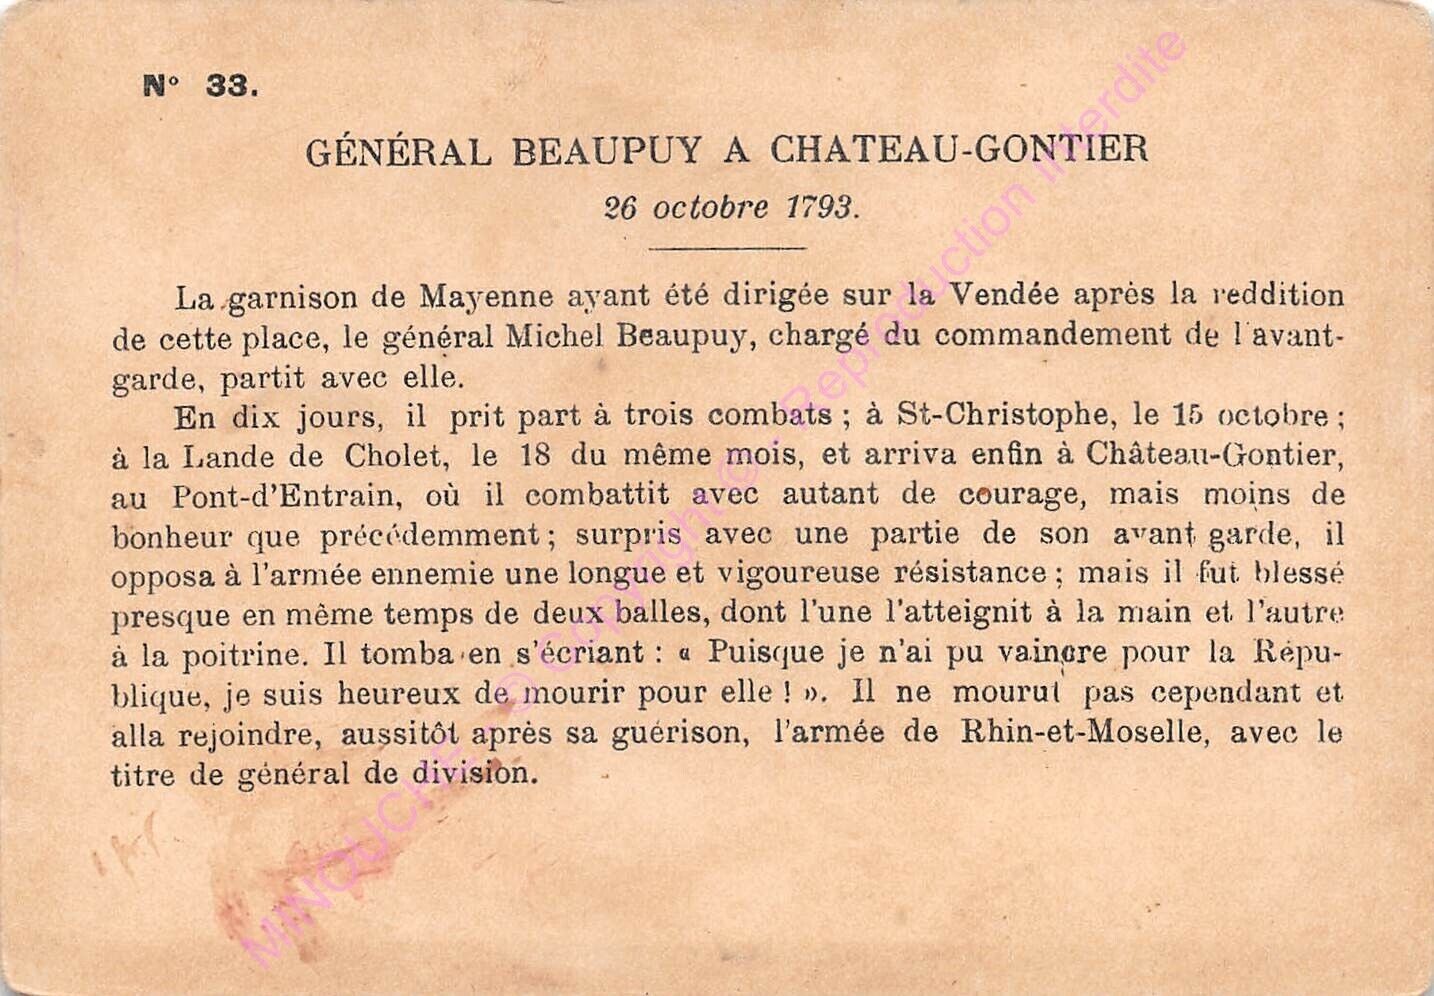 Chromo Histoire of France General Beaupuy IN Castle Gontier n33 | eBay